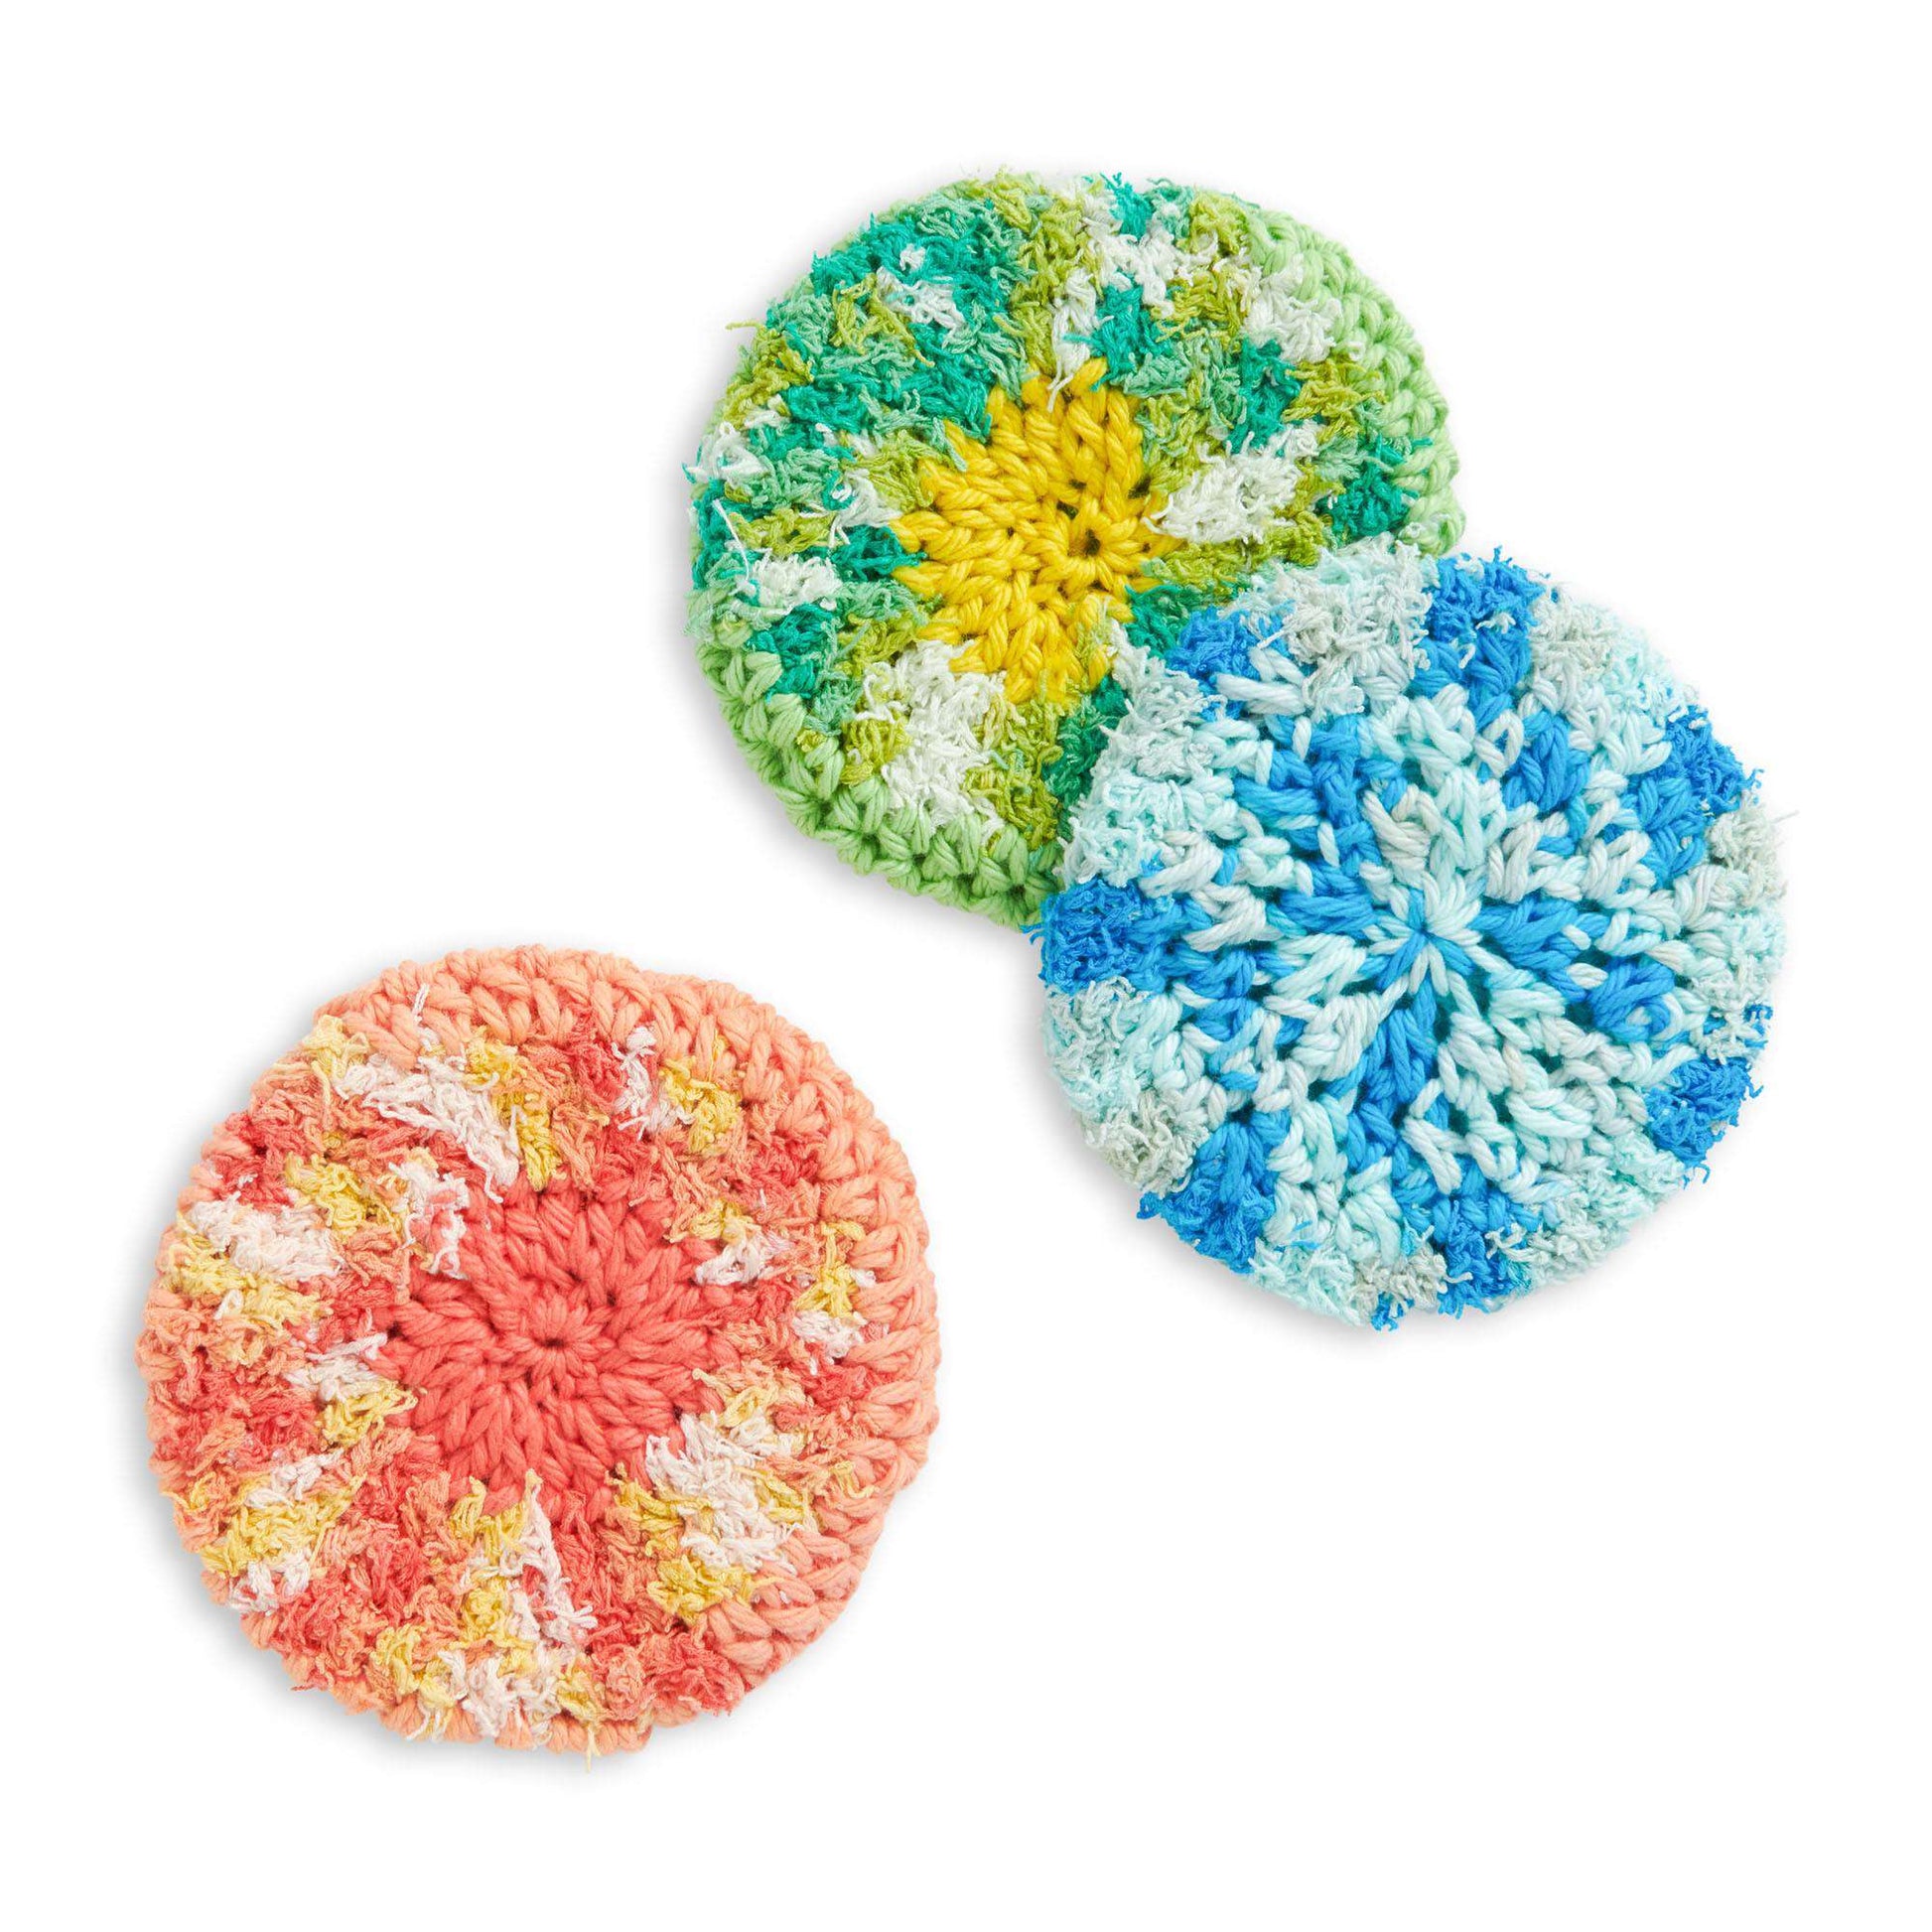 Sunburst Dish Scrubby Crochet Pattern, Kitchen Scrubbies, Pan